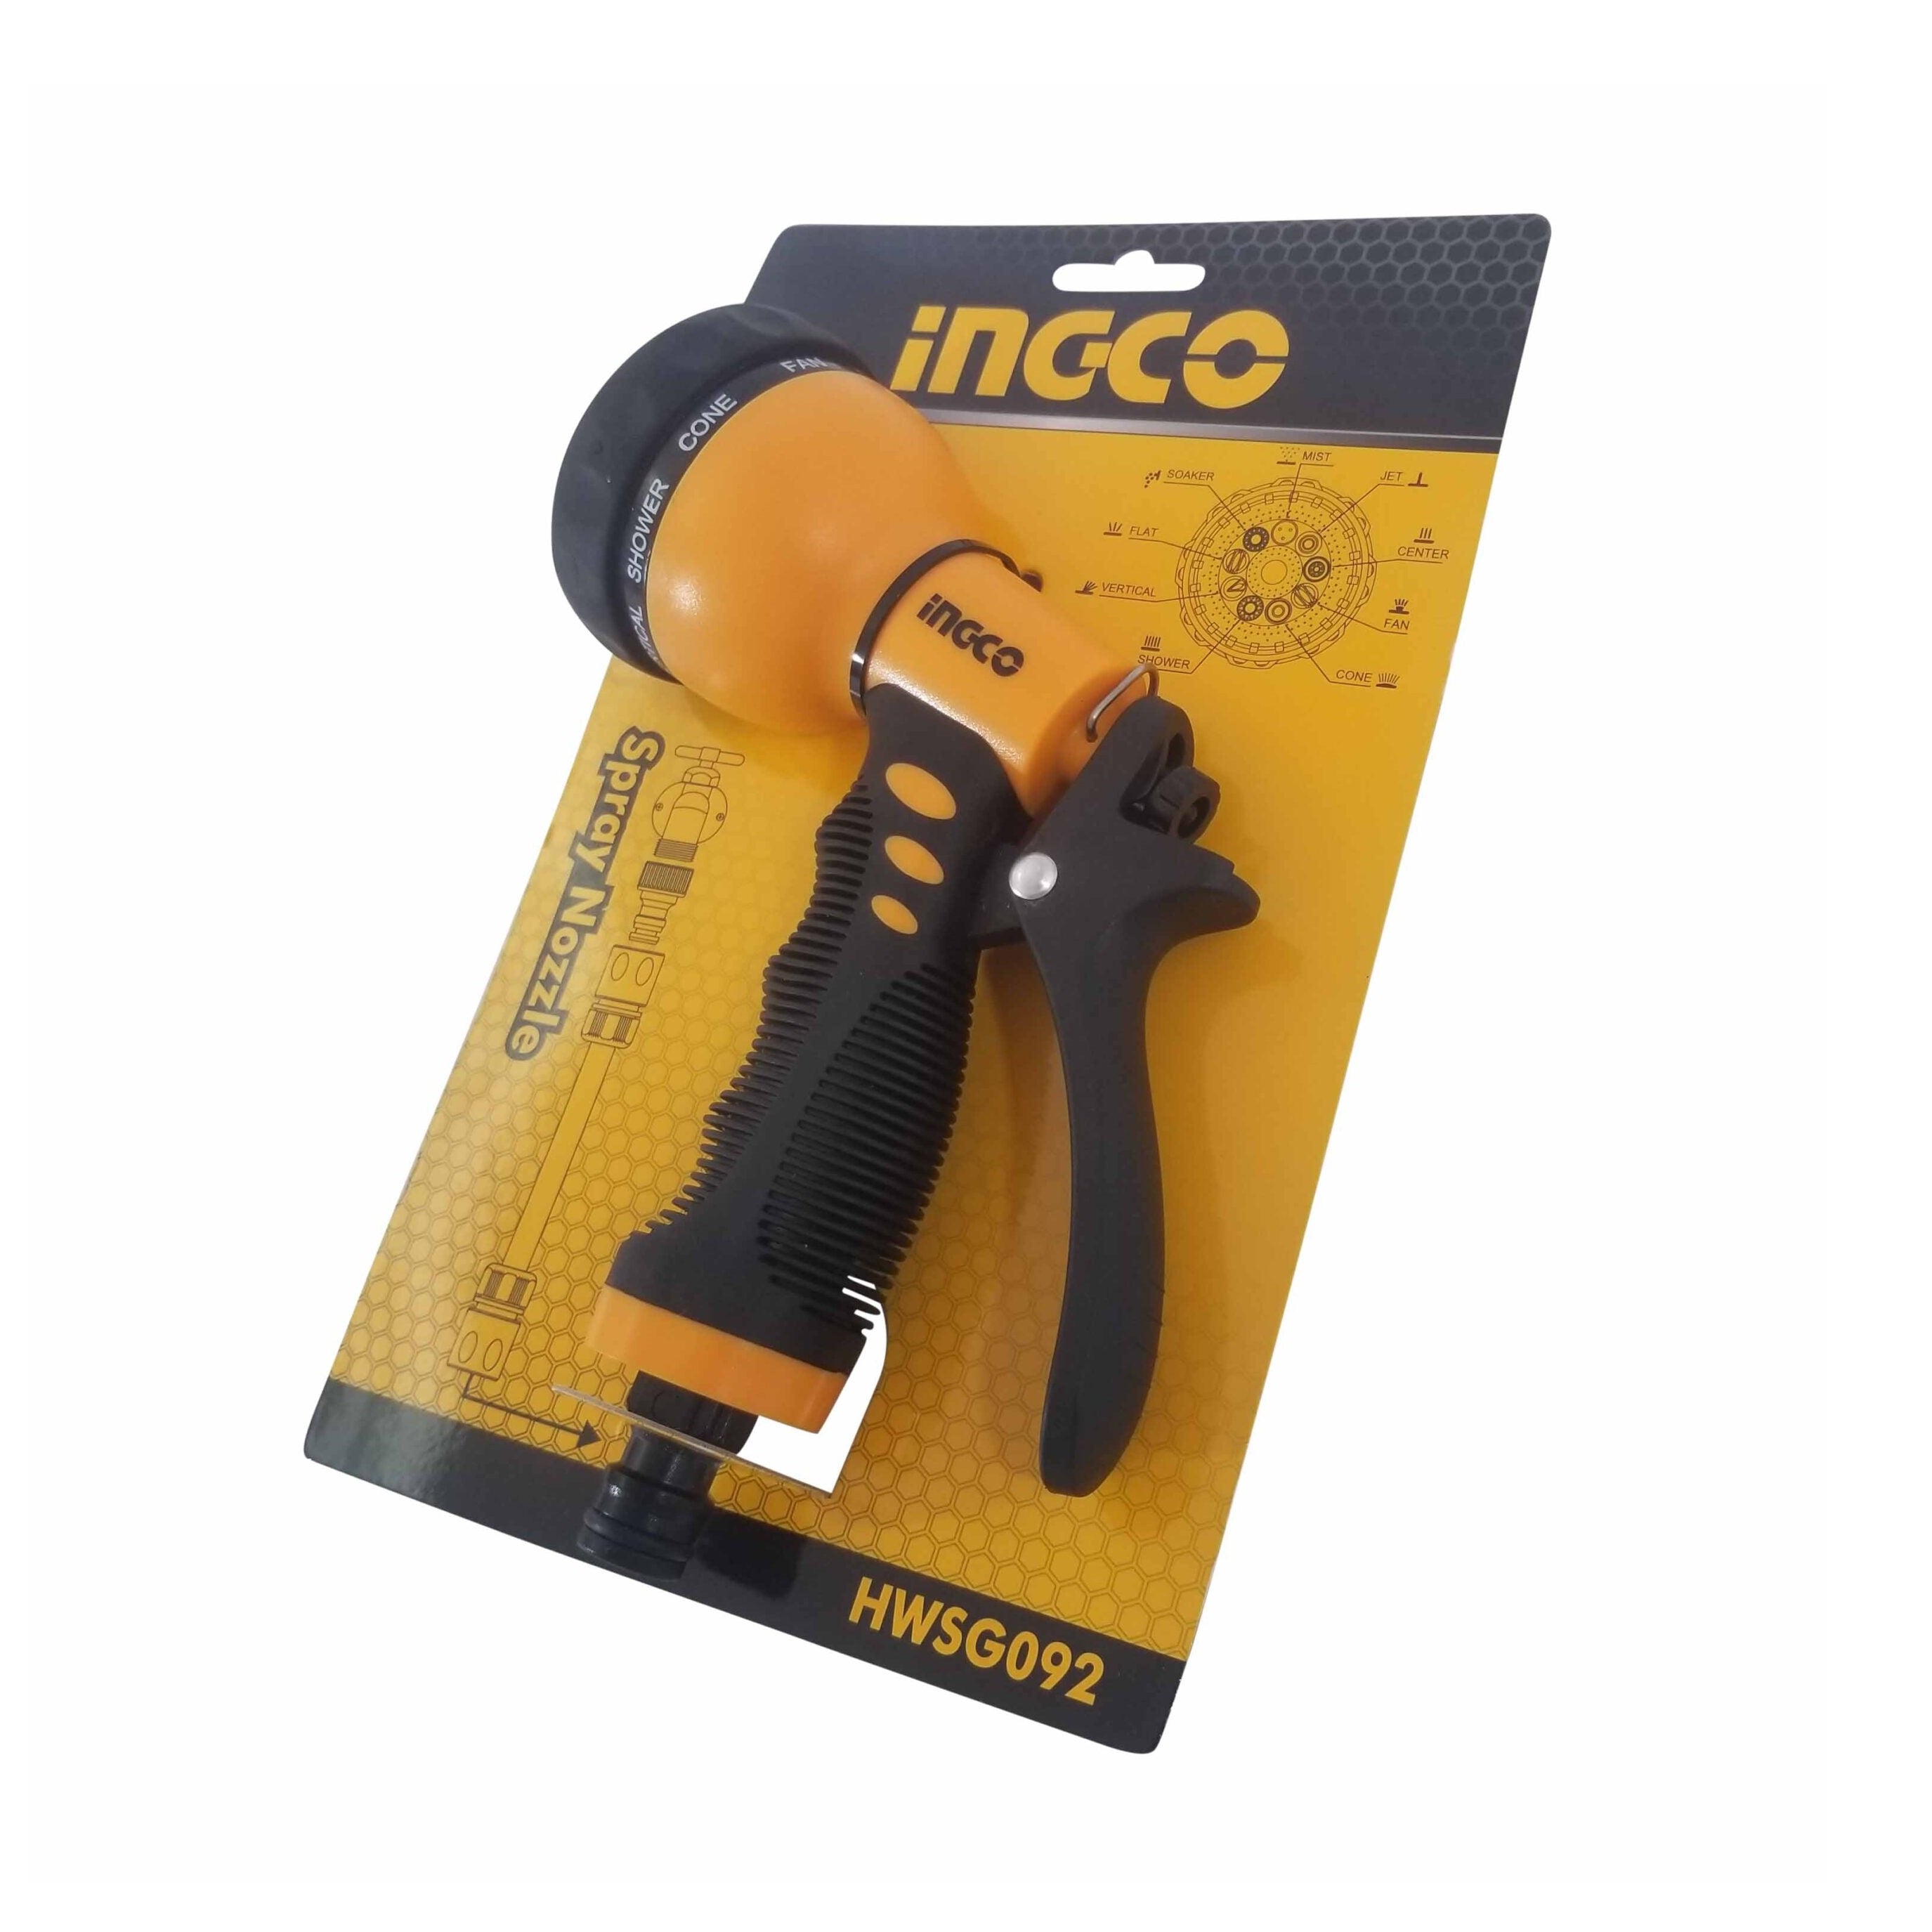 Ingco Plastic Trigger Nozzle 9 Level Adjustable HWSG092 (Pack of 2)